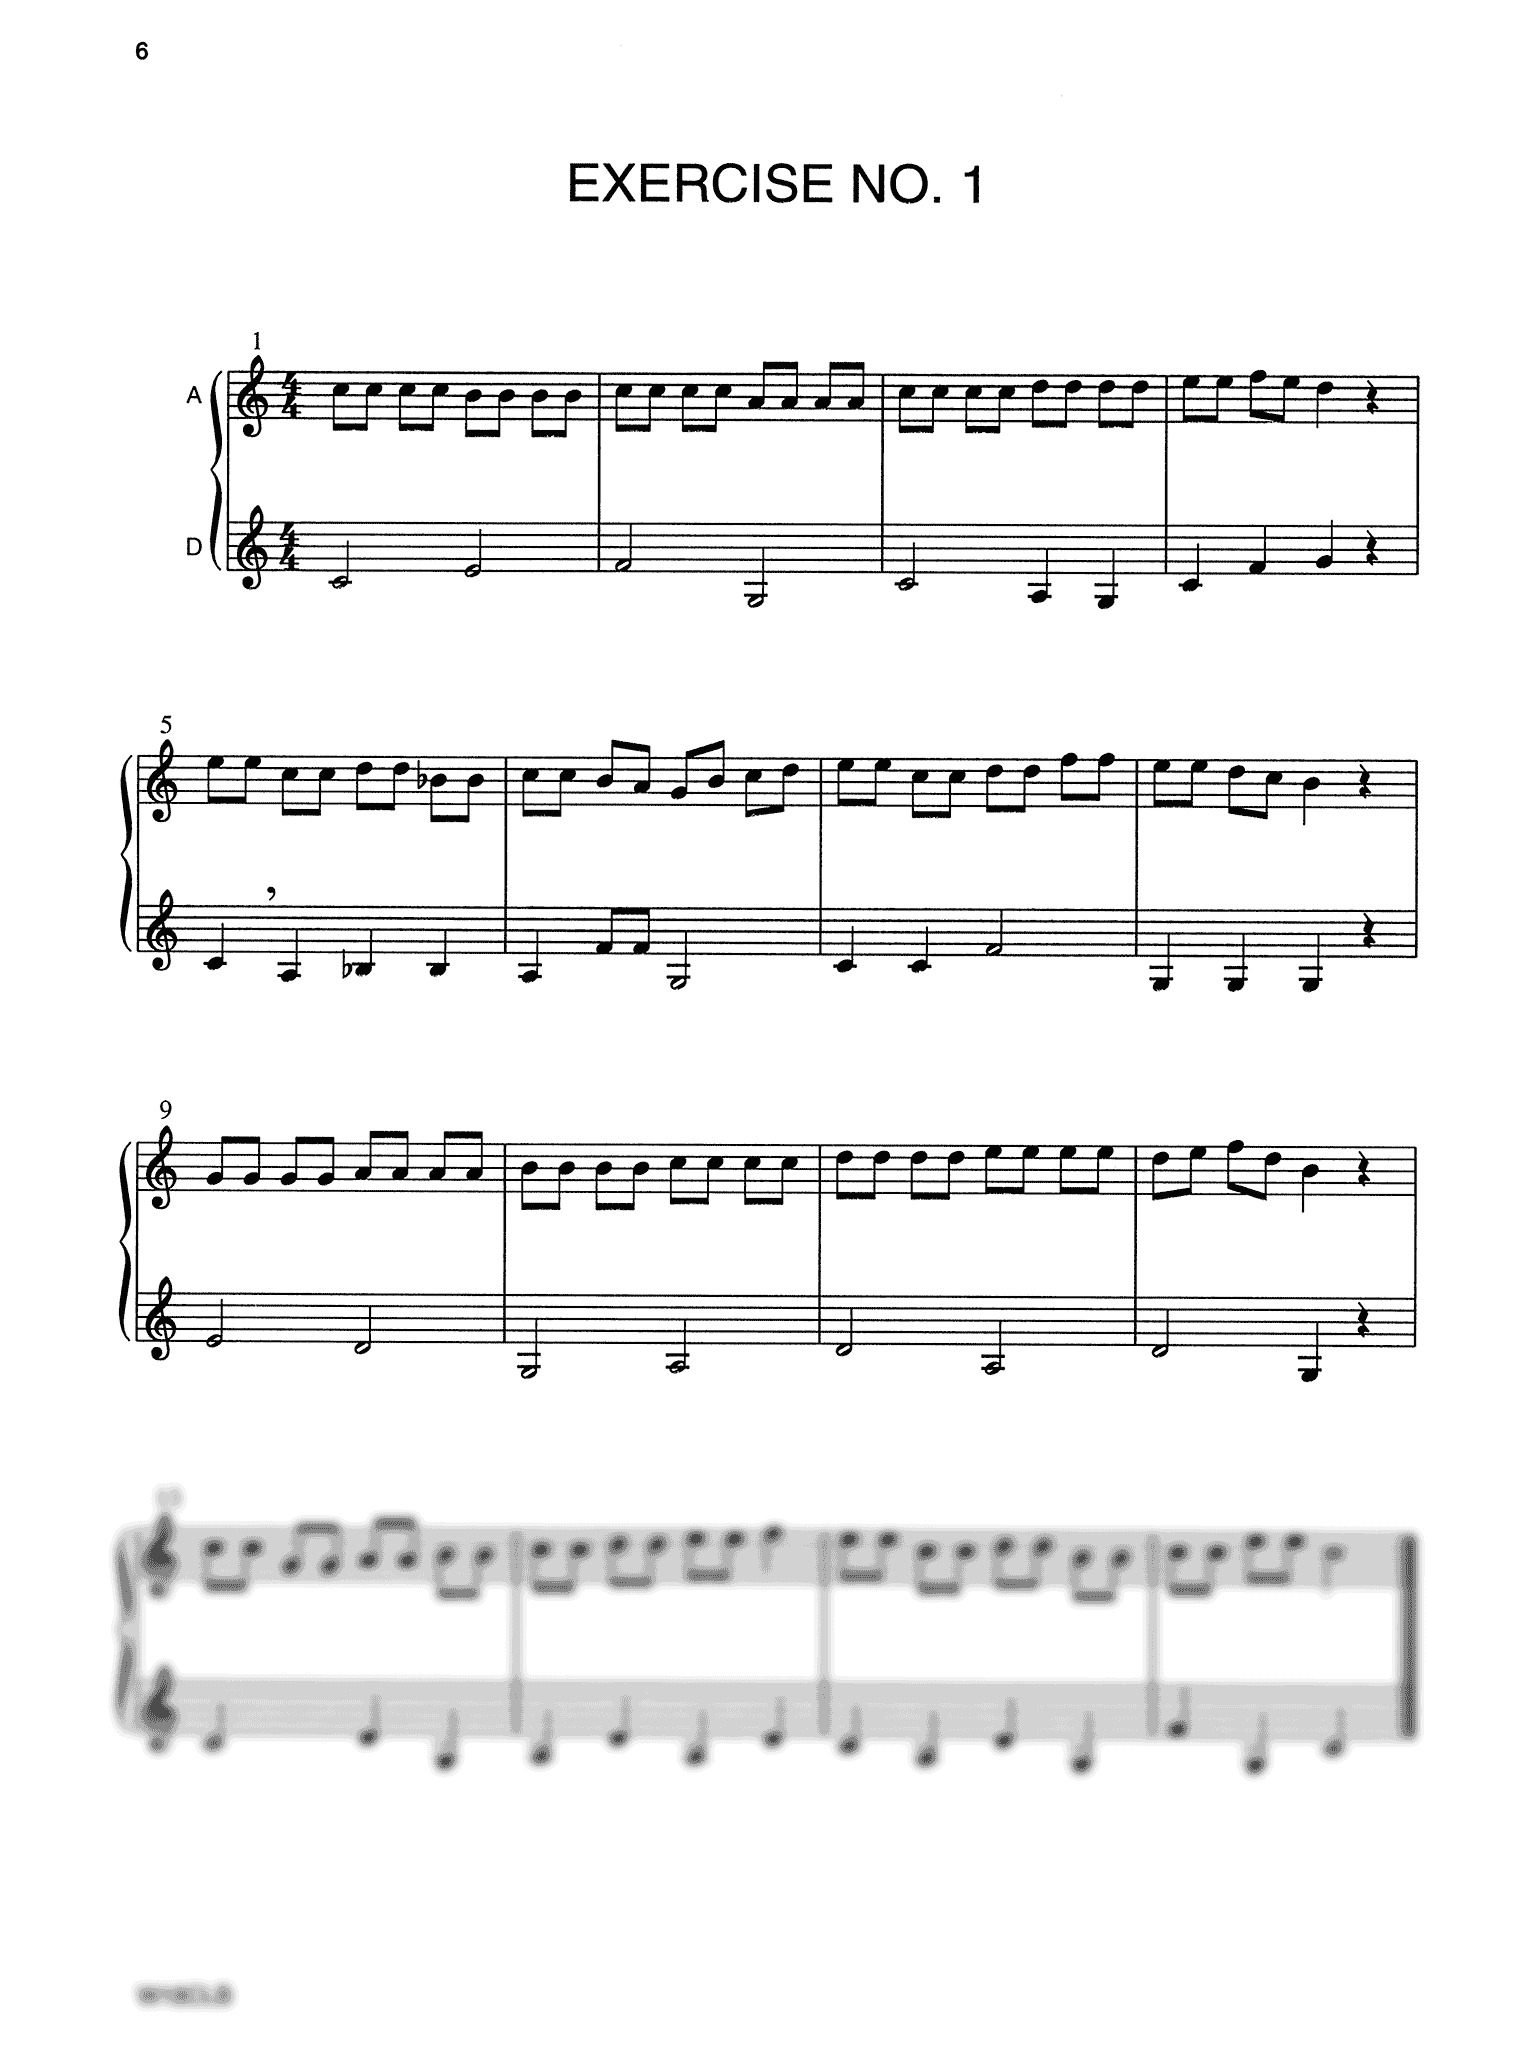 Harmonized Rhythms for Concert Band Page 6